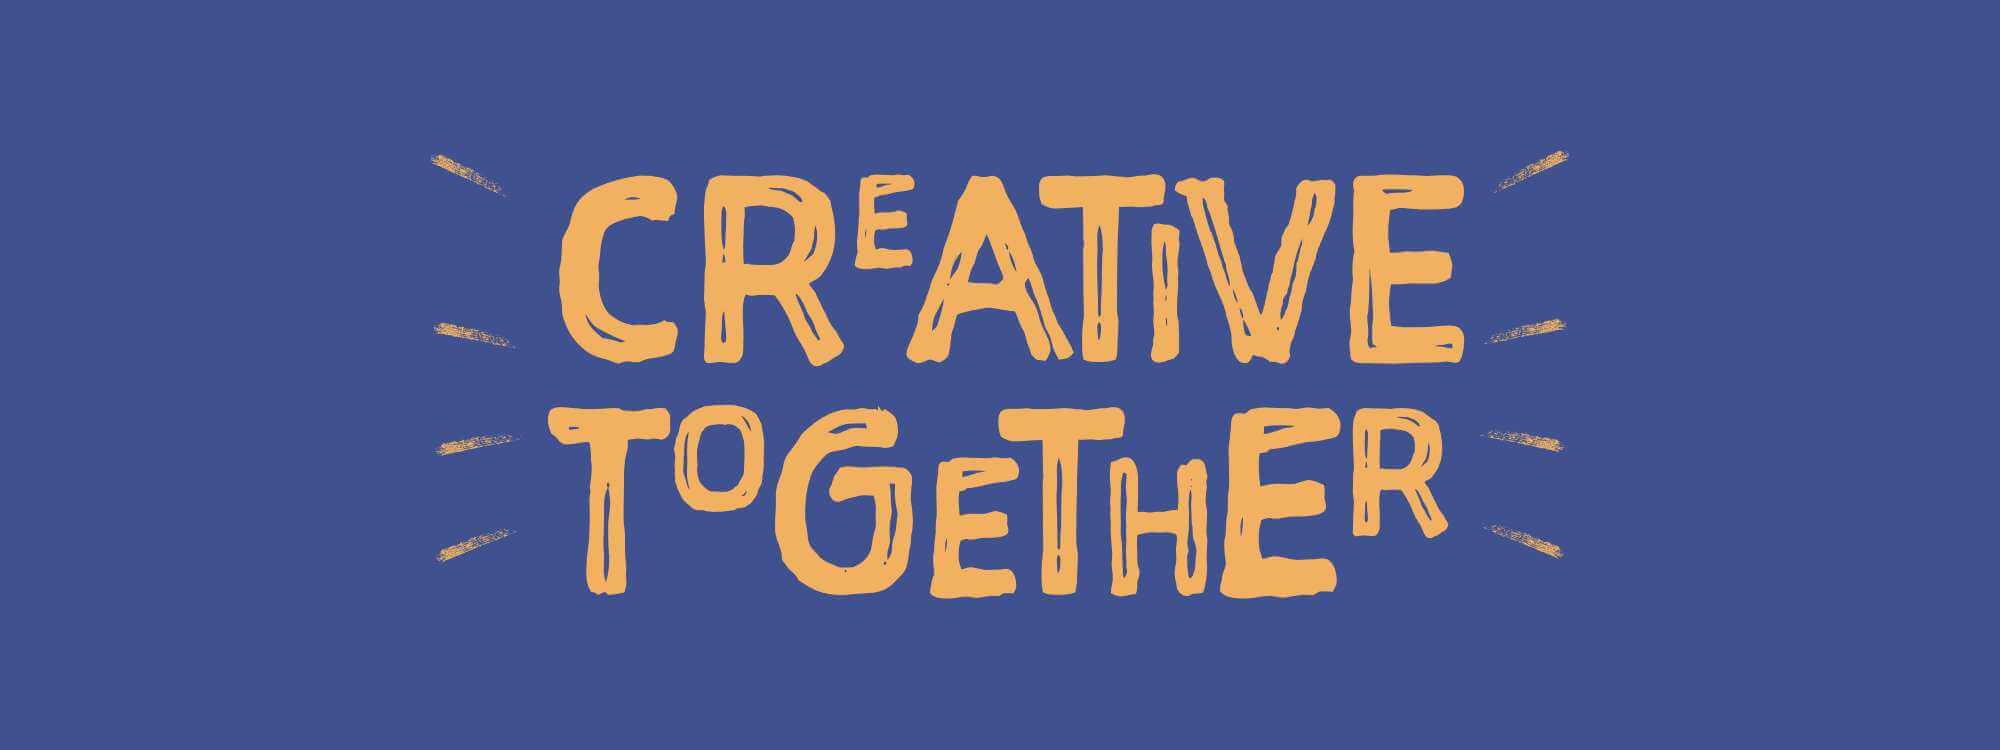 Creative Together